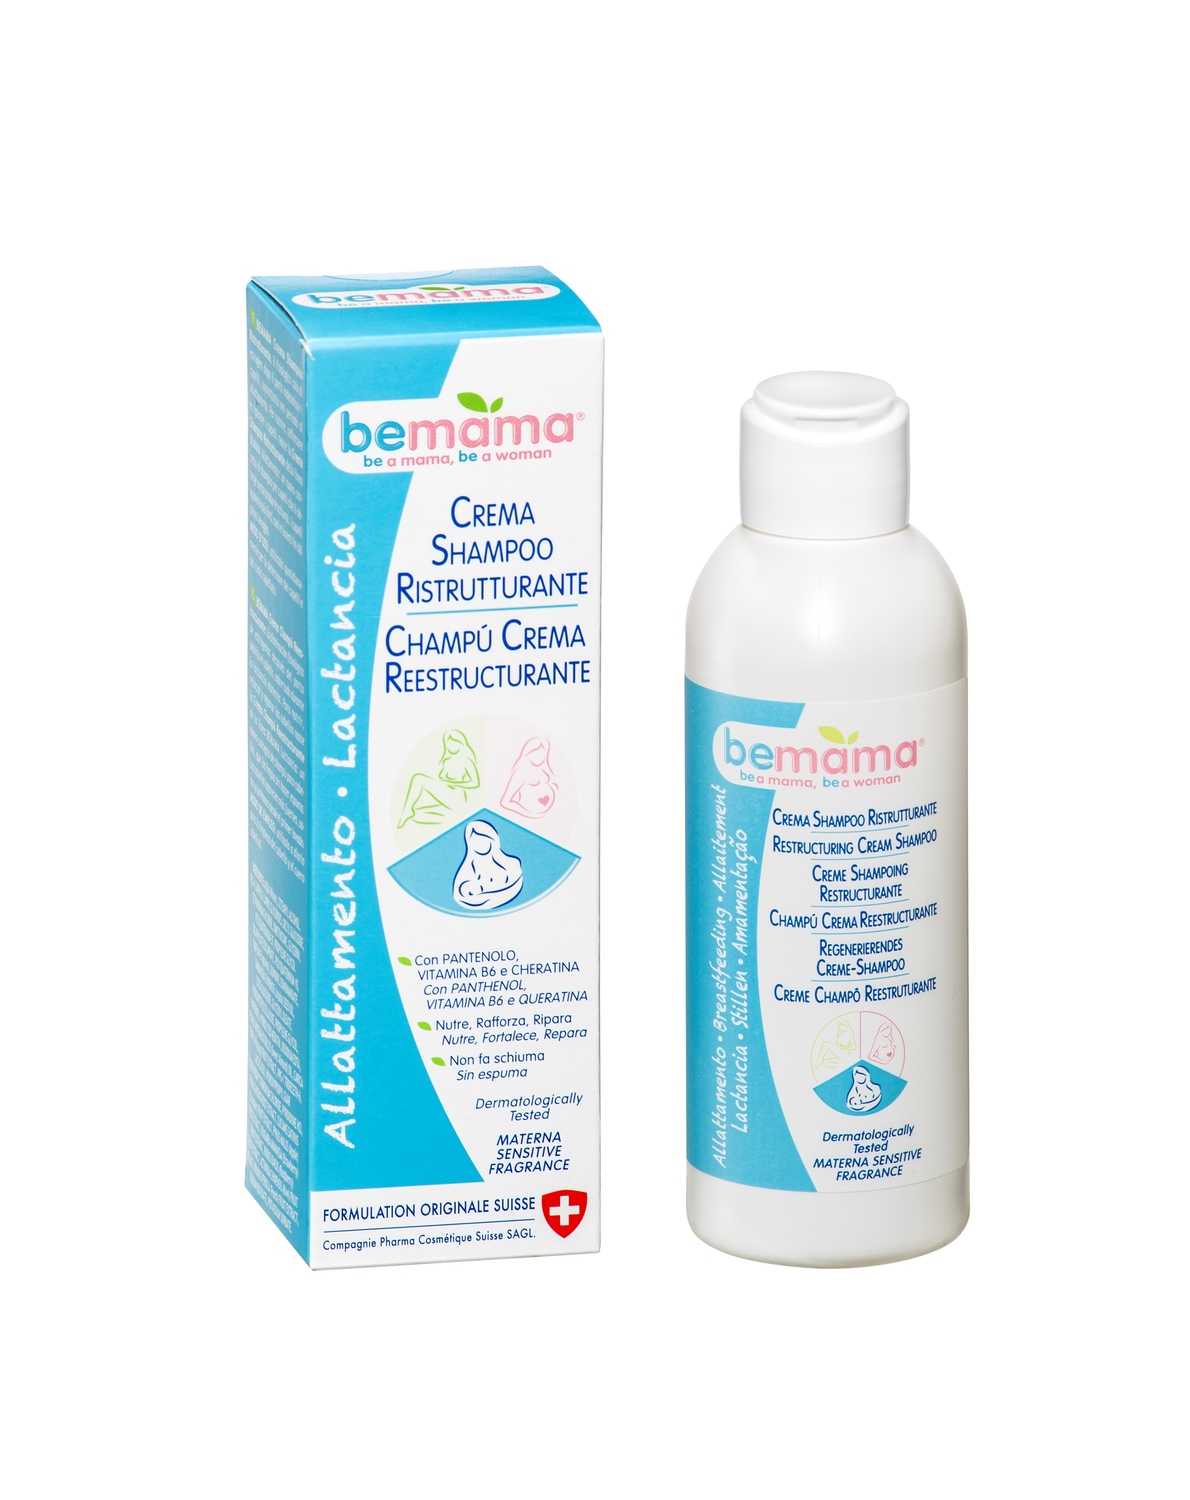 Bemama presenta la Crema shampoo ristrutturante